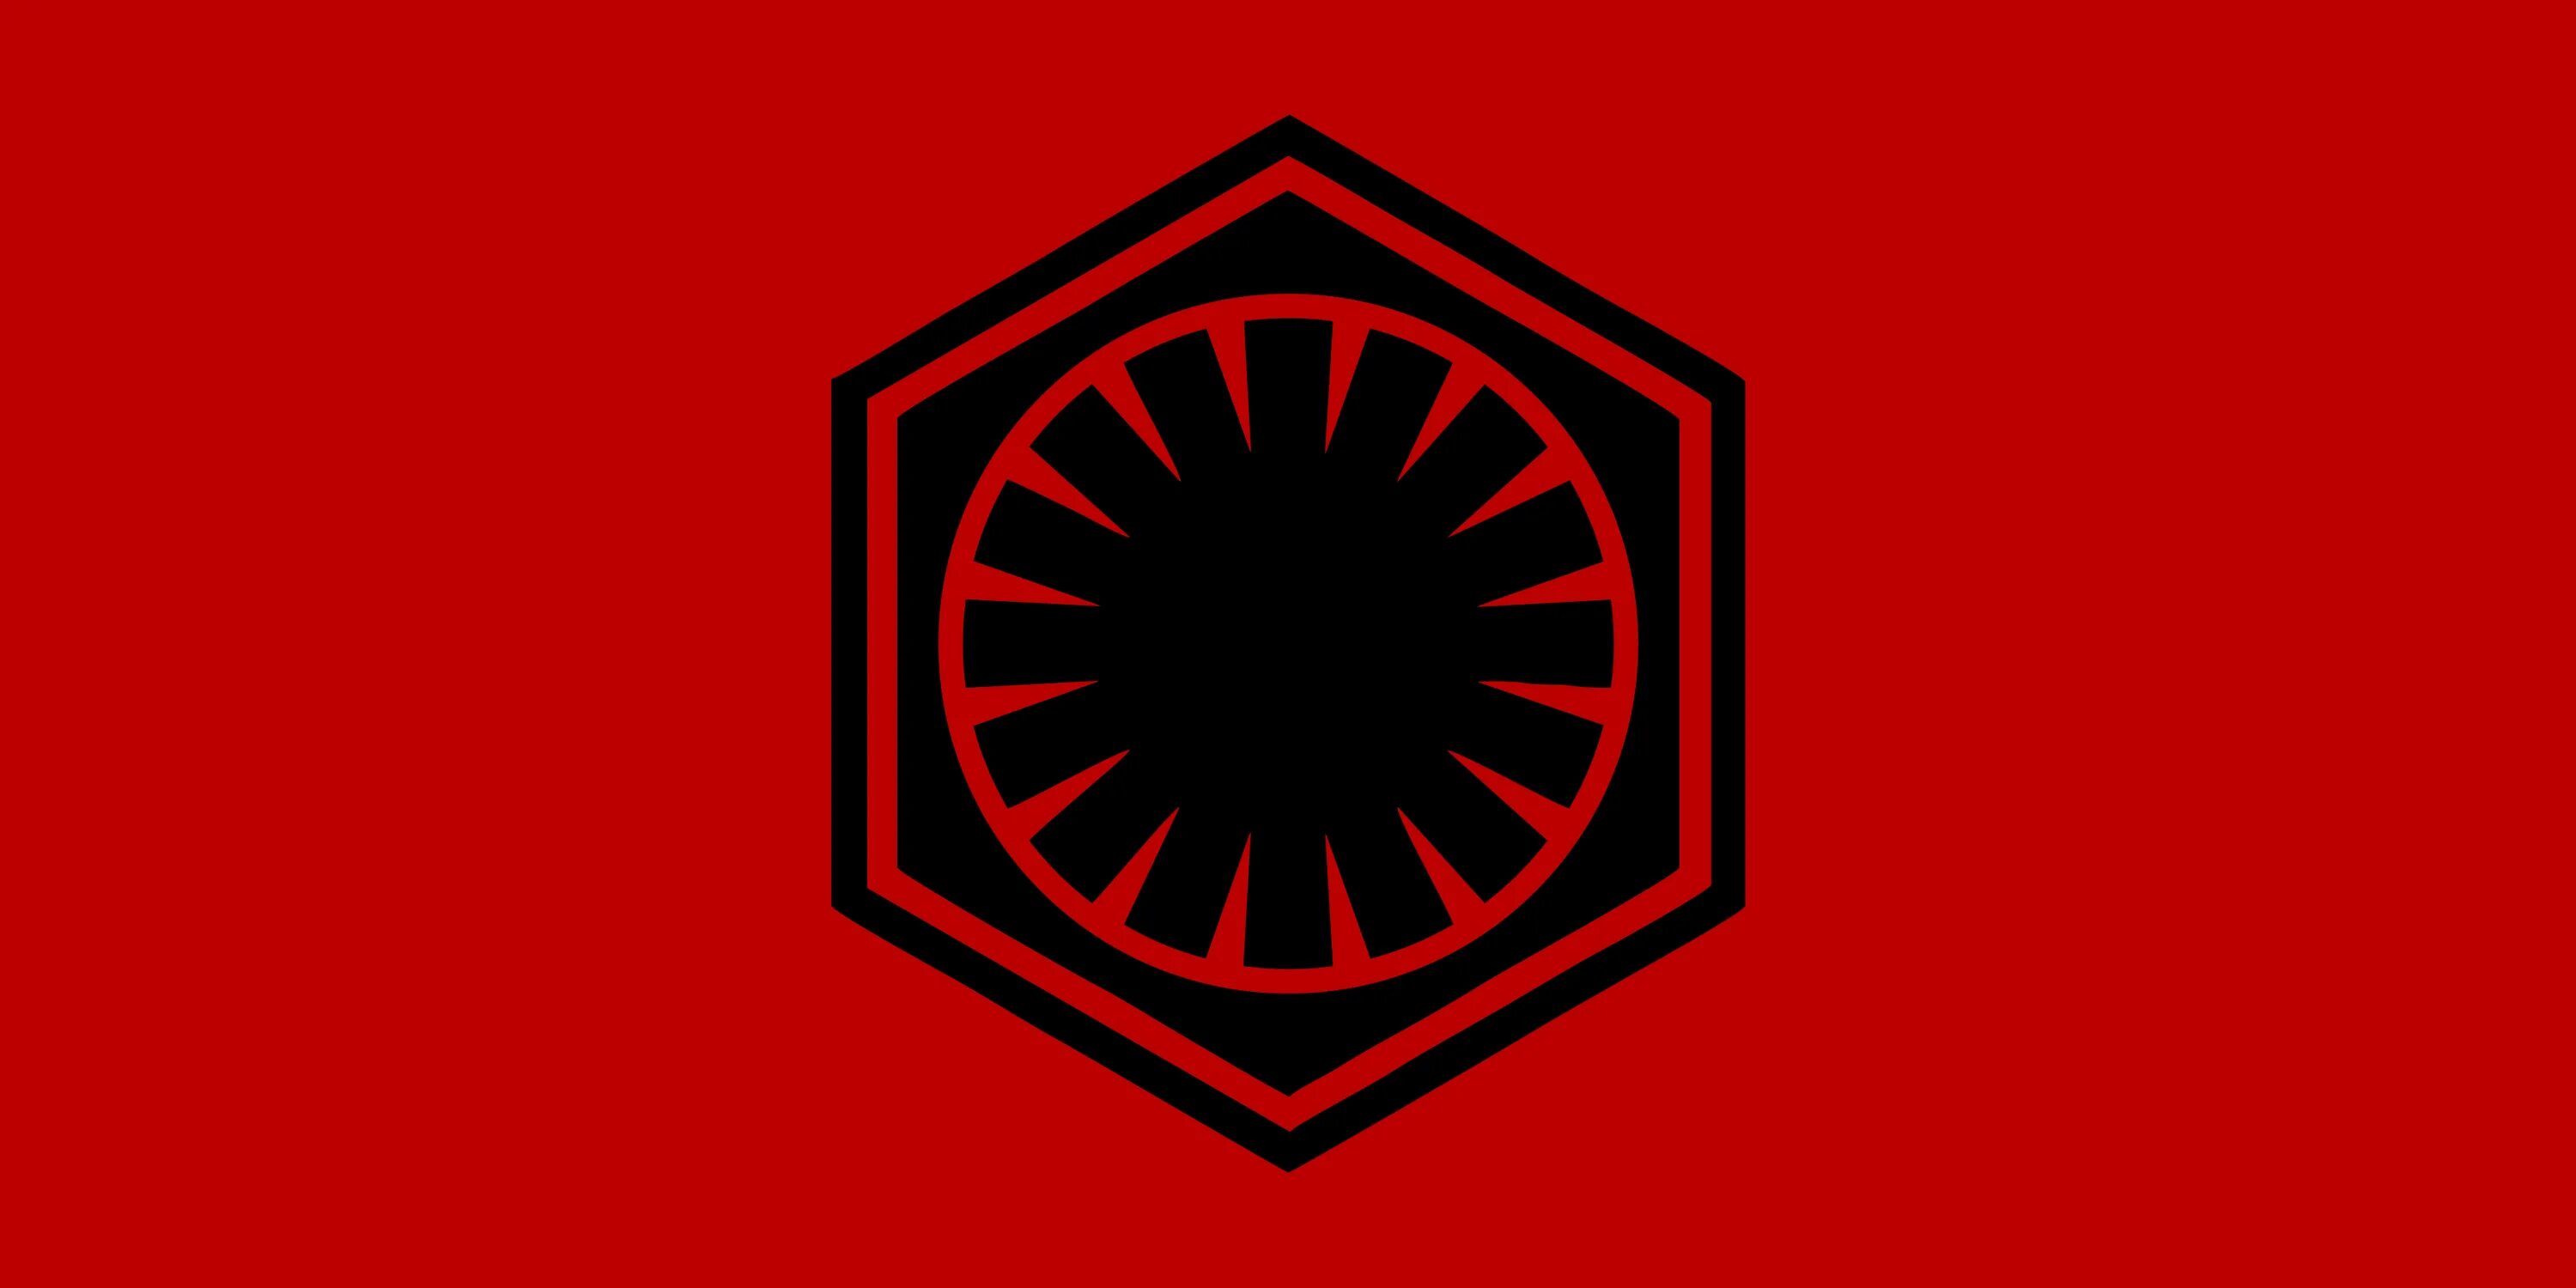 Первый ордер. Первый орден Звездные войны. Флаг первого ордена Звездные войны. Первый орден Star Wars знак. Первый орден Стар ВАРС.